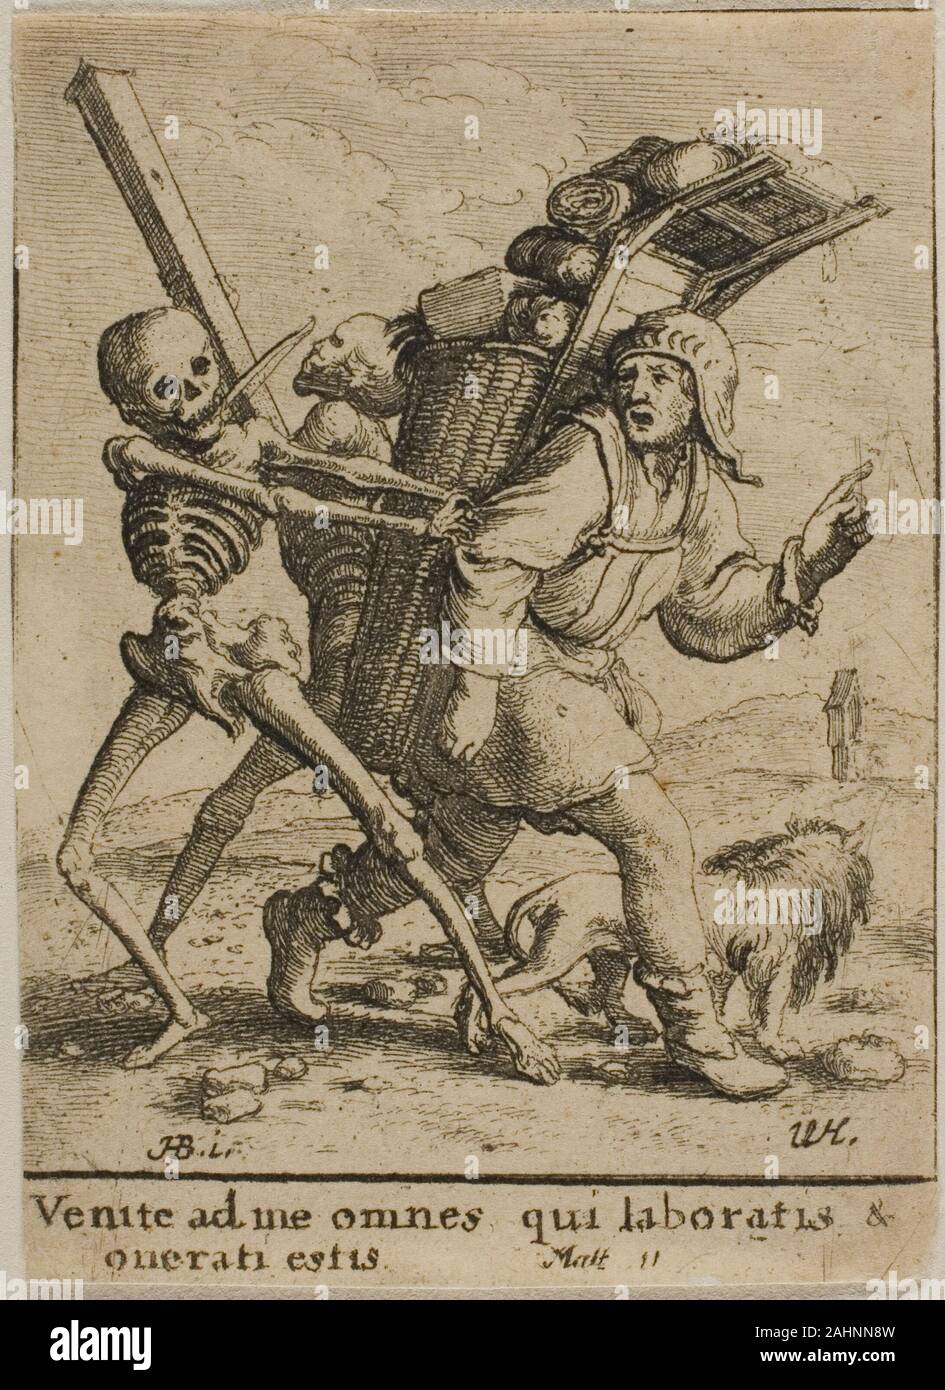 Wenceslaus Hollar. Il Peddlar e la morte. 1651. Boemia. Incisione su avorio carta intessuta Foto Stock